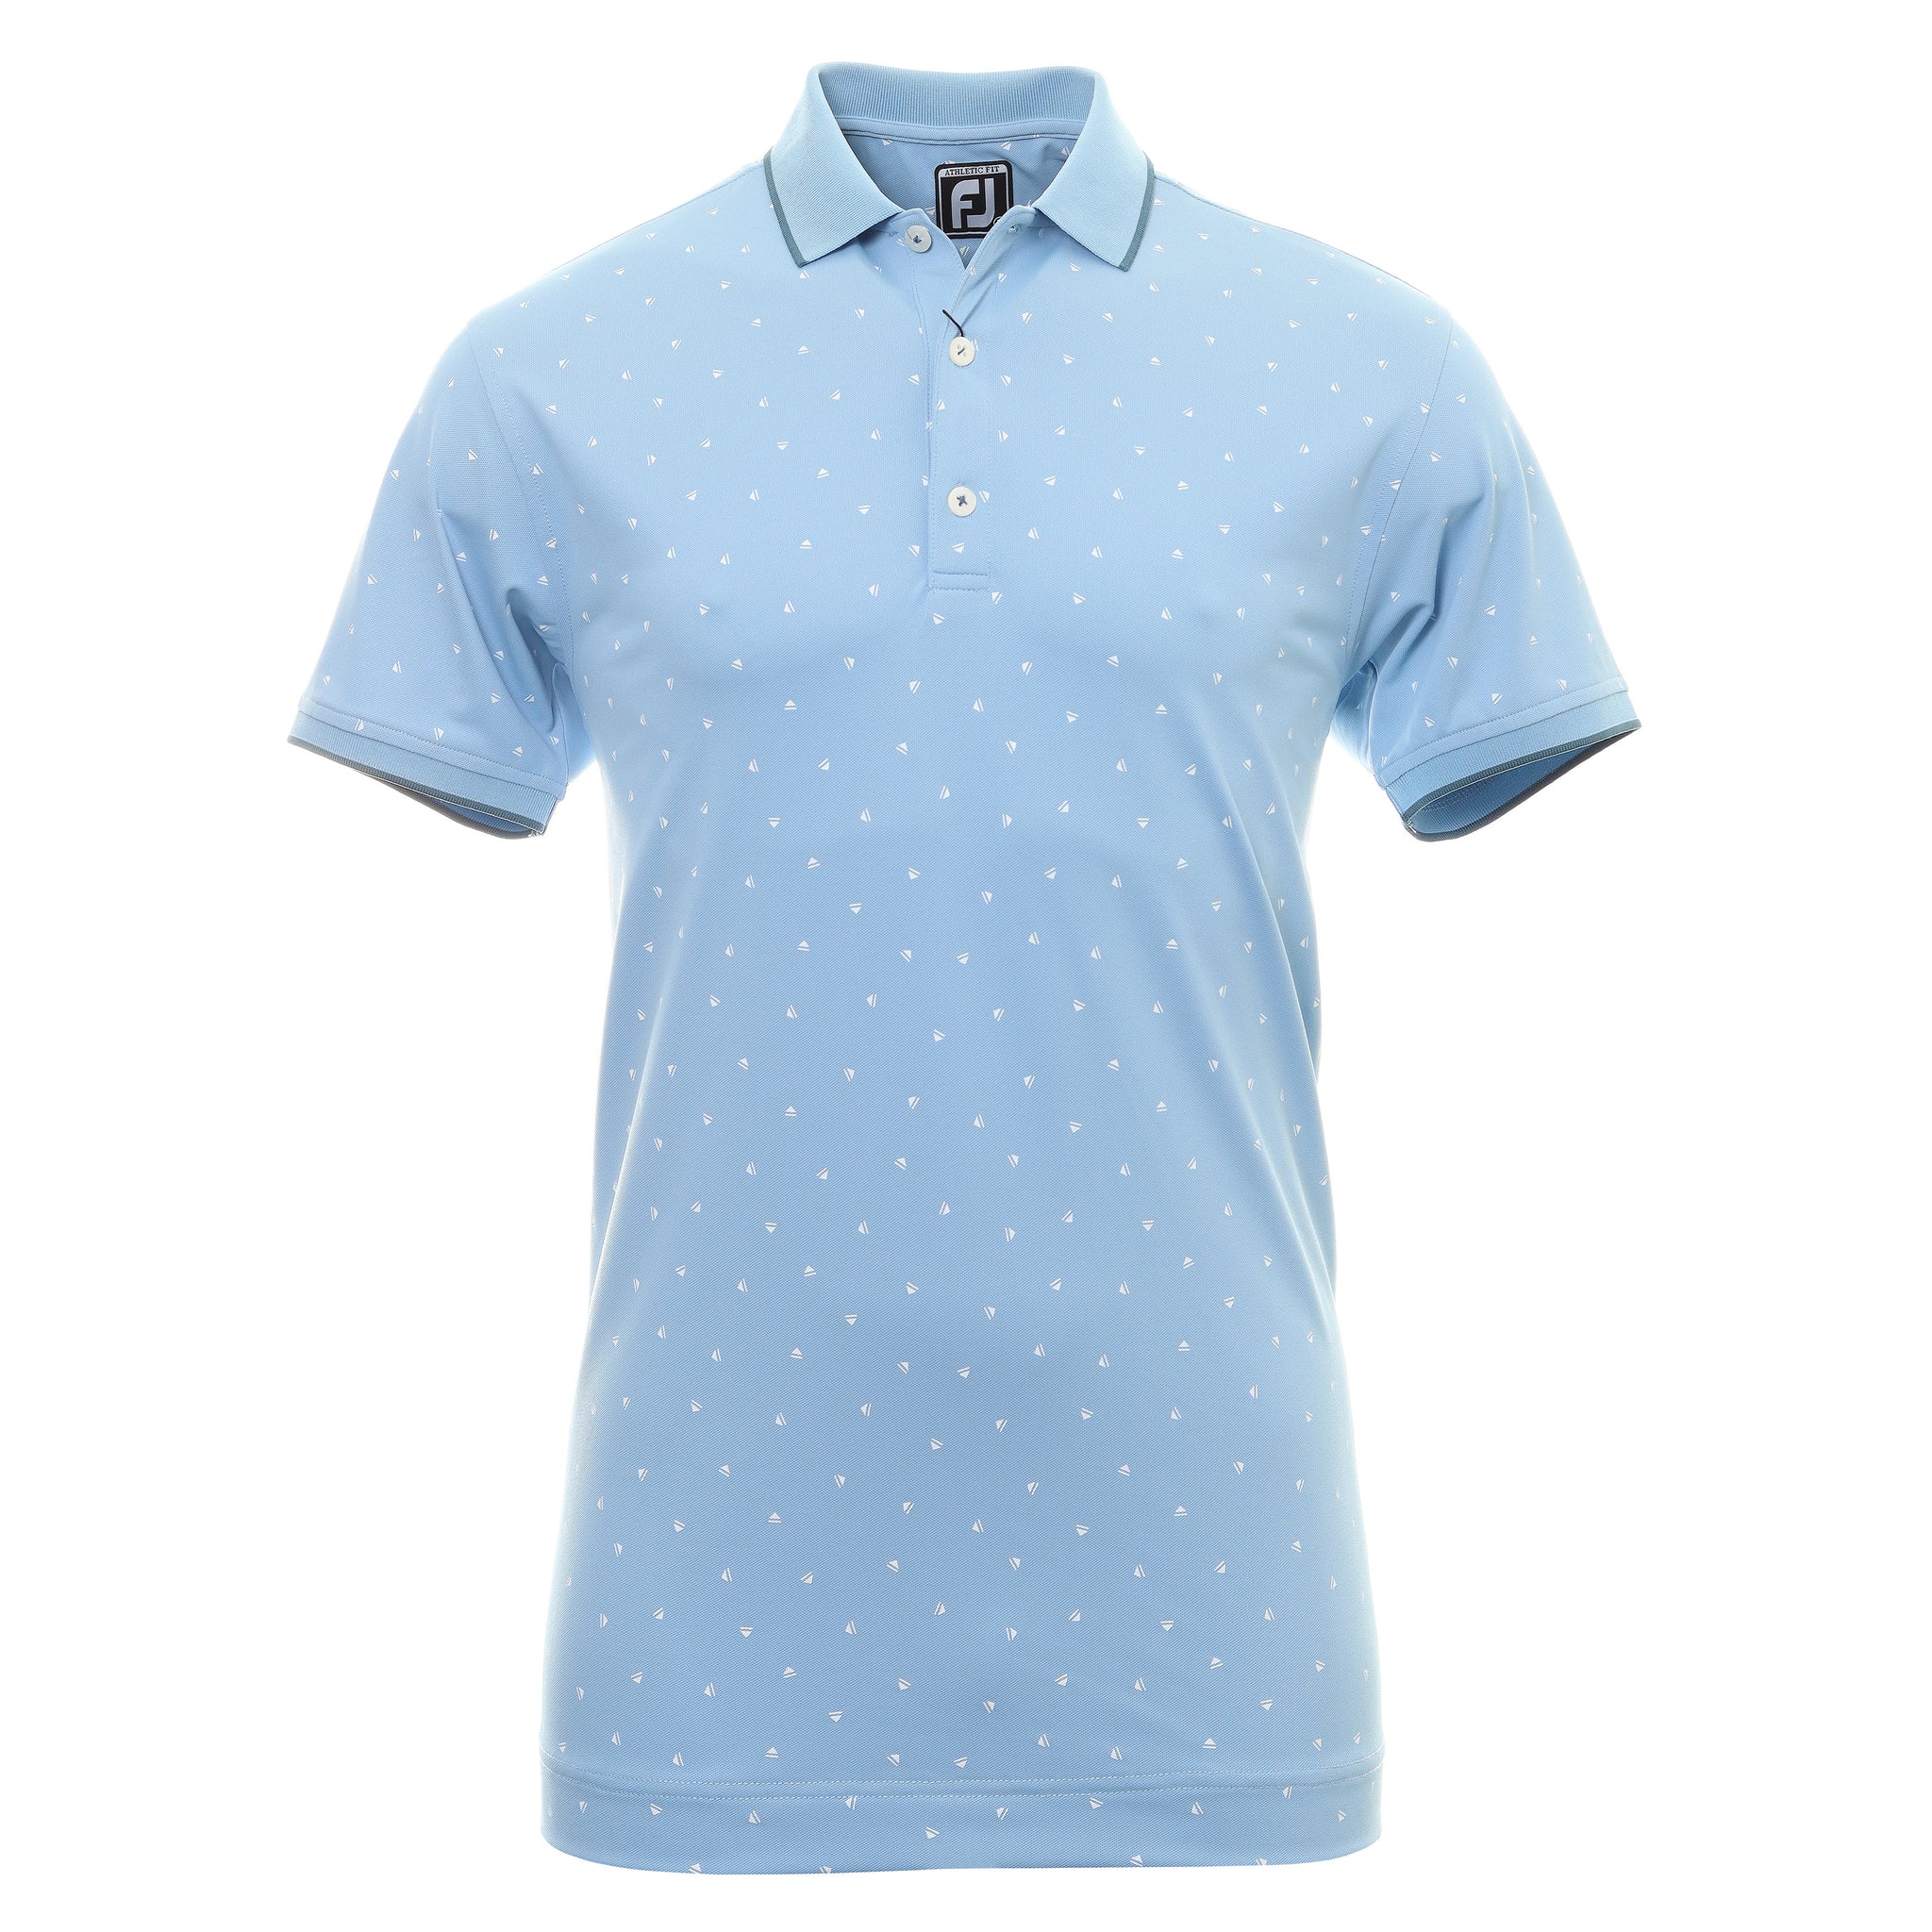 FootJoy Push Play Print Pique Golf Shirt 88395 Dusk Blue White ...